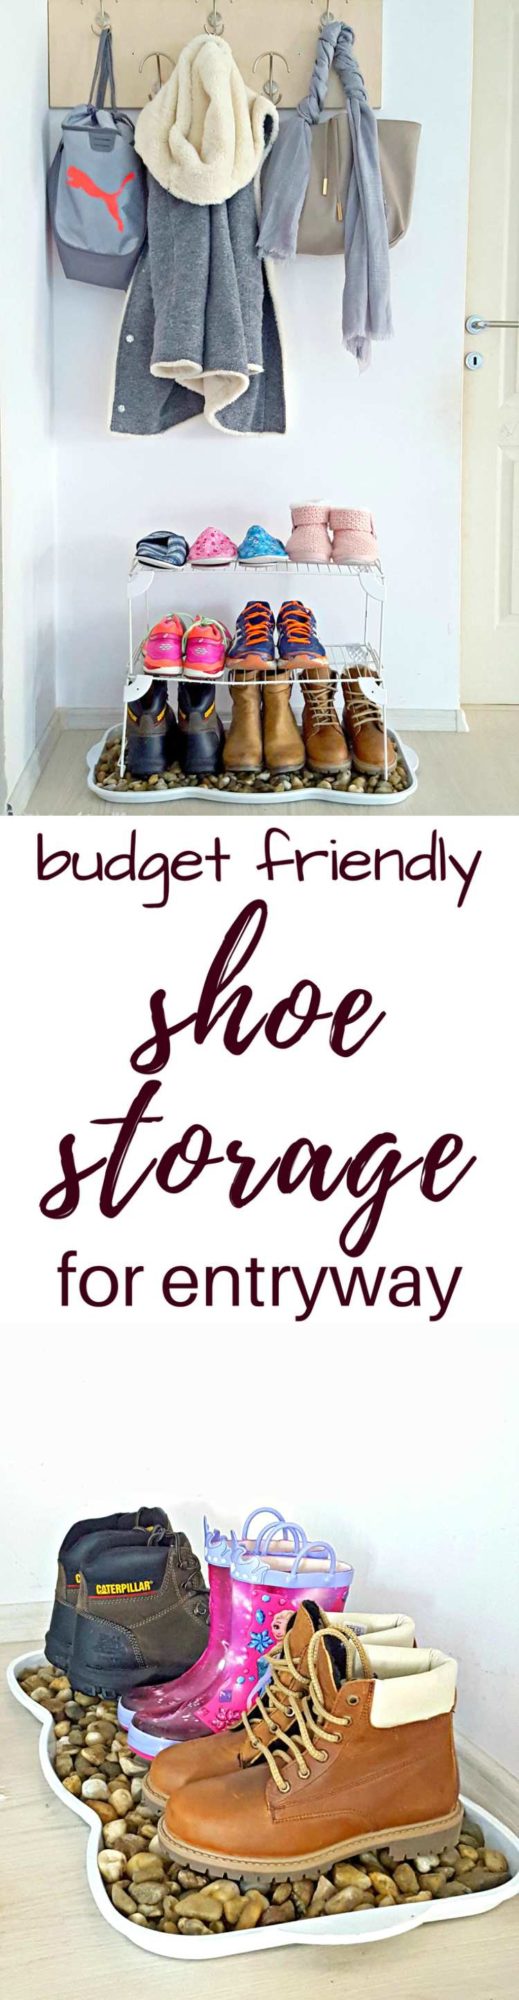 DIY shoe storage